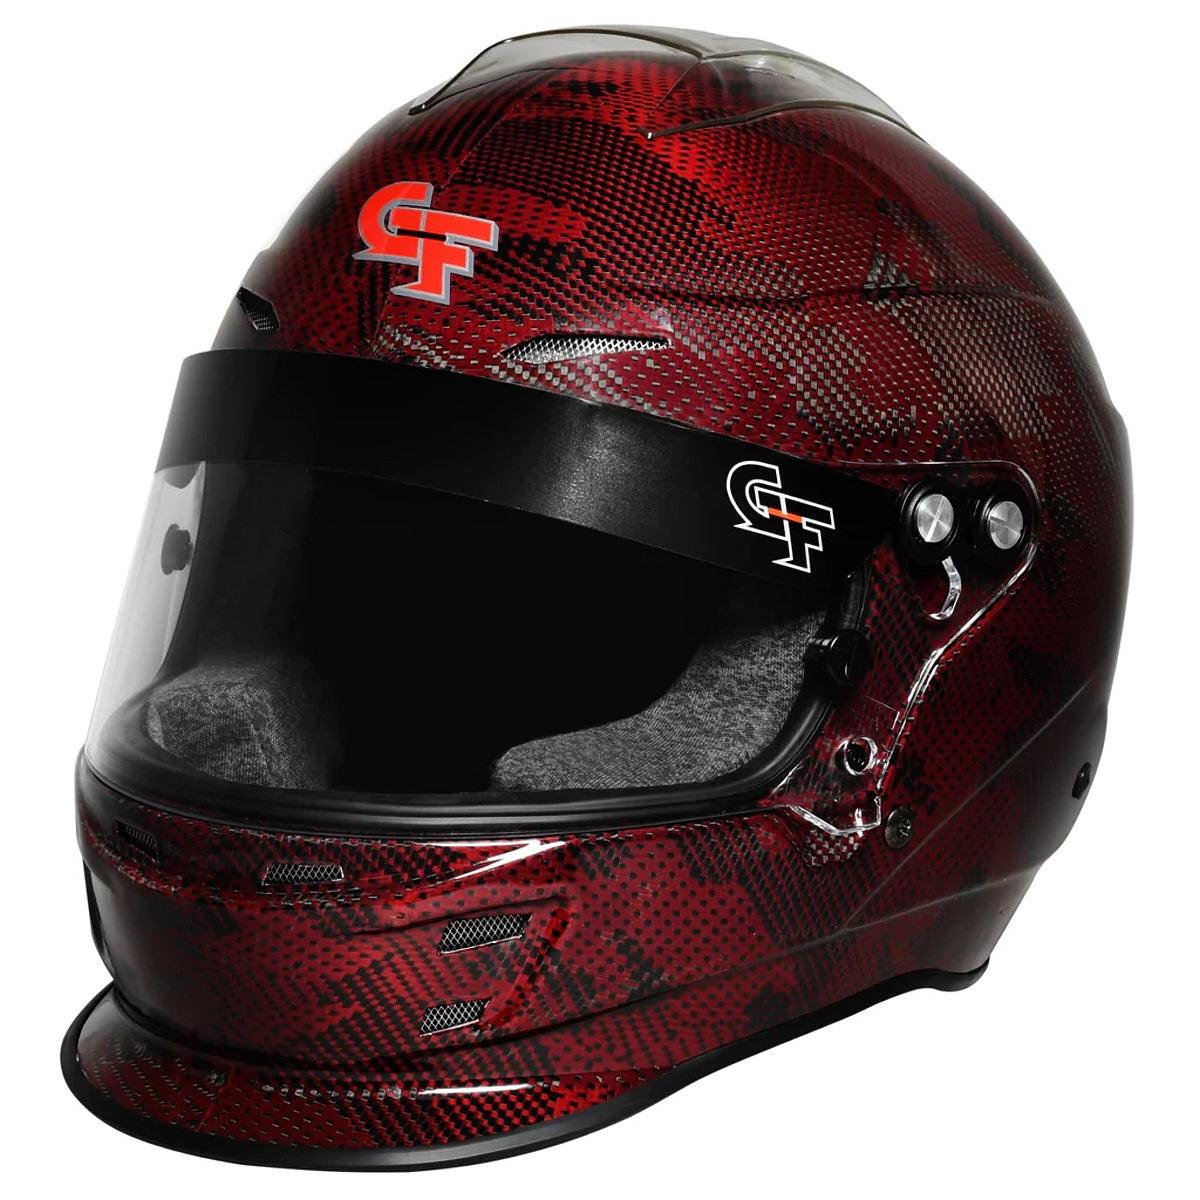 Helmet Nova Fusion XX-Large Red SA2020 - Burlile Performance Products